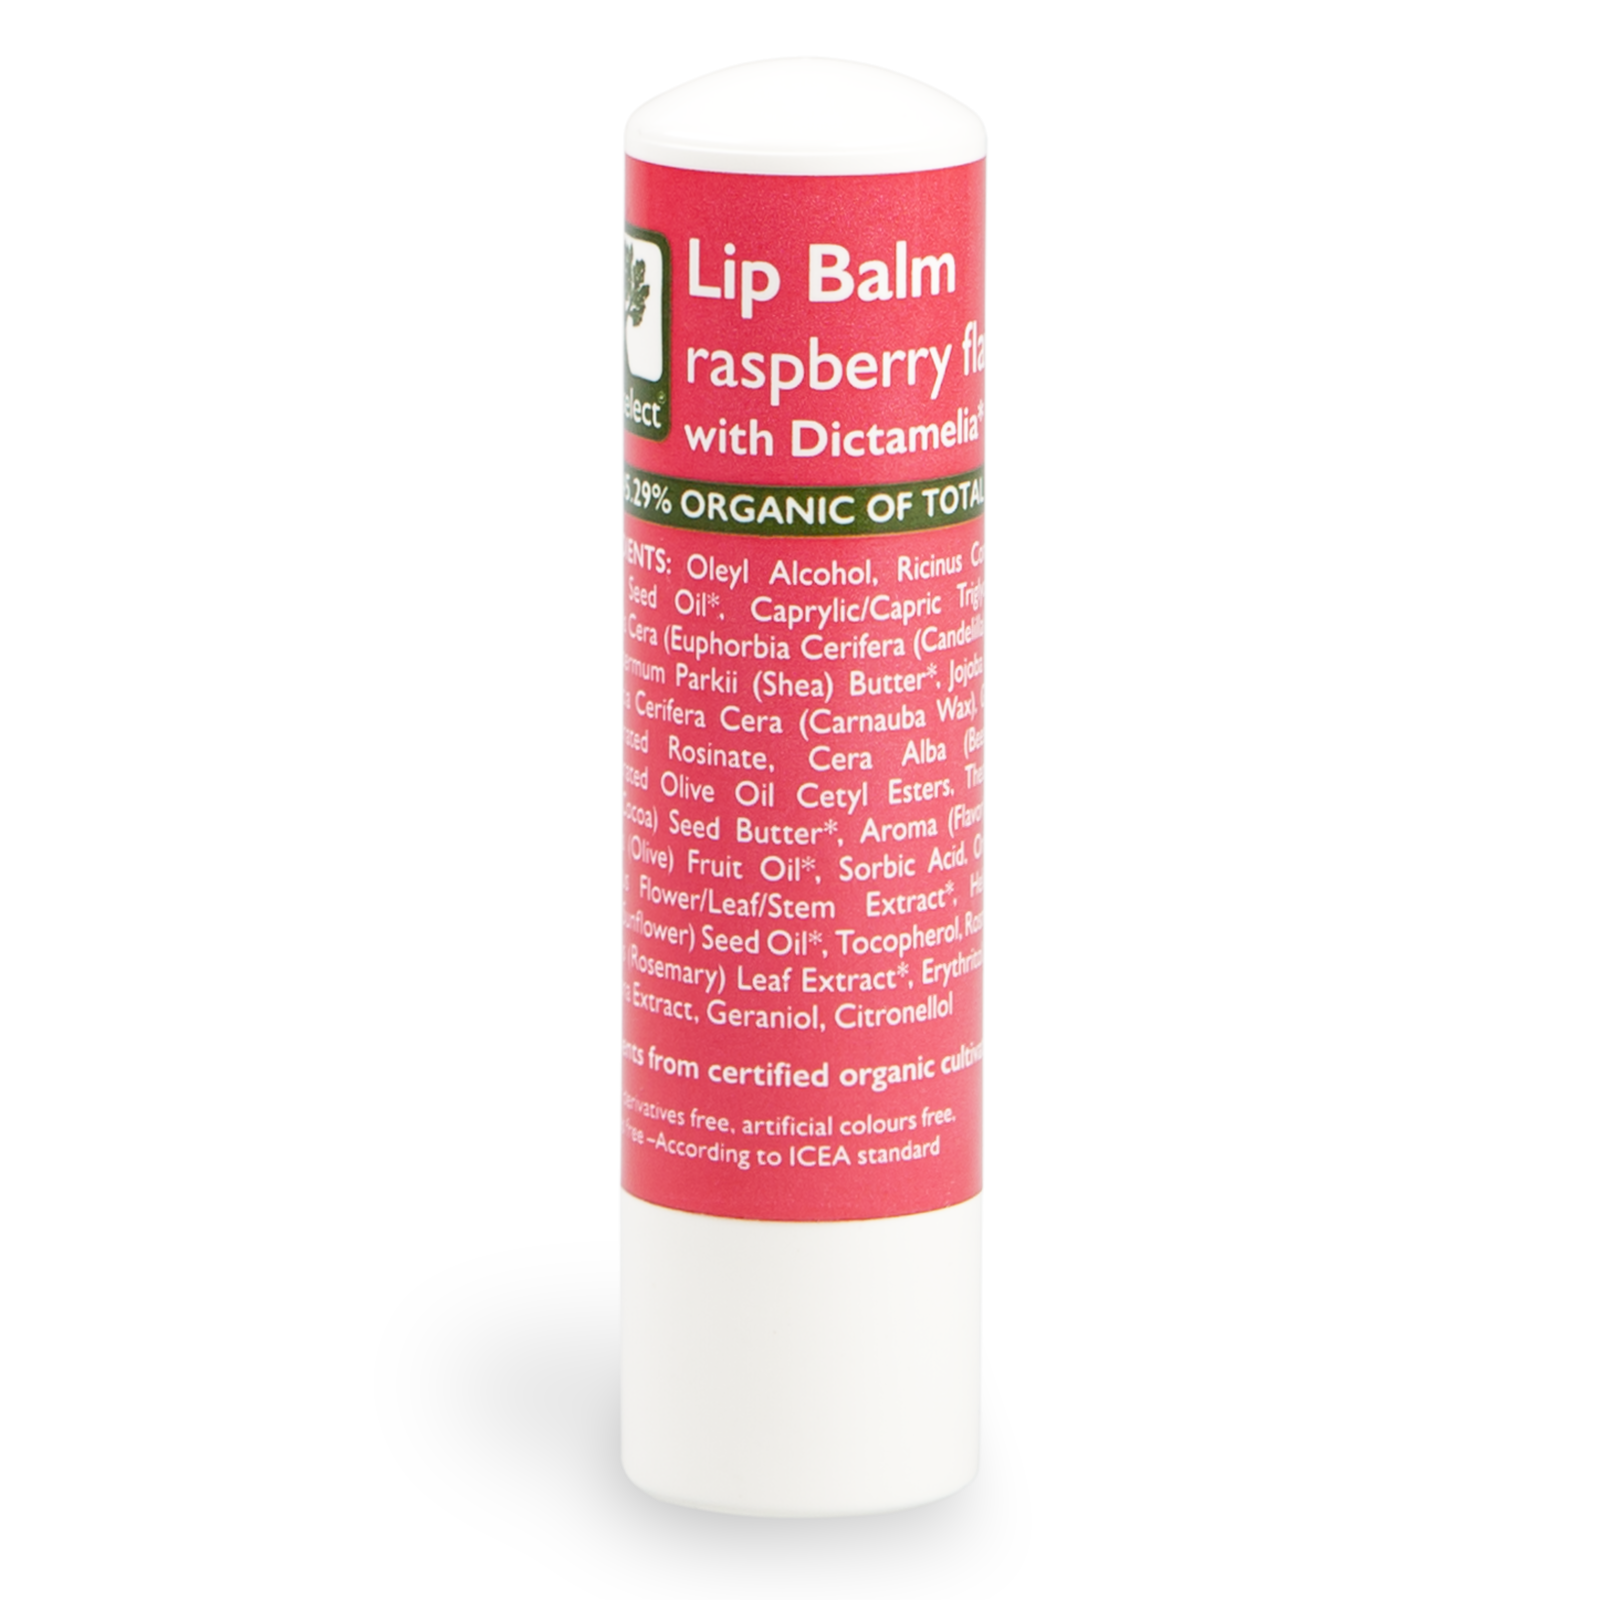 Bioselect Lip Balm raspberry flavor